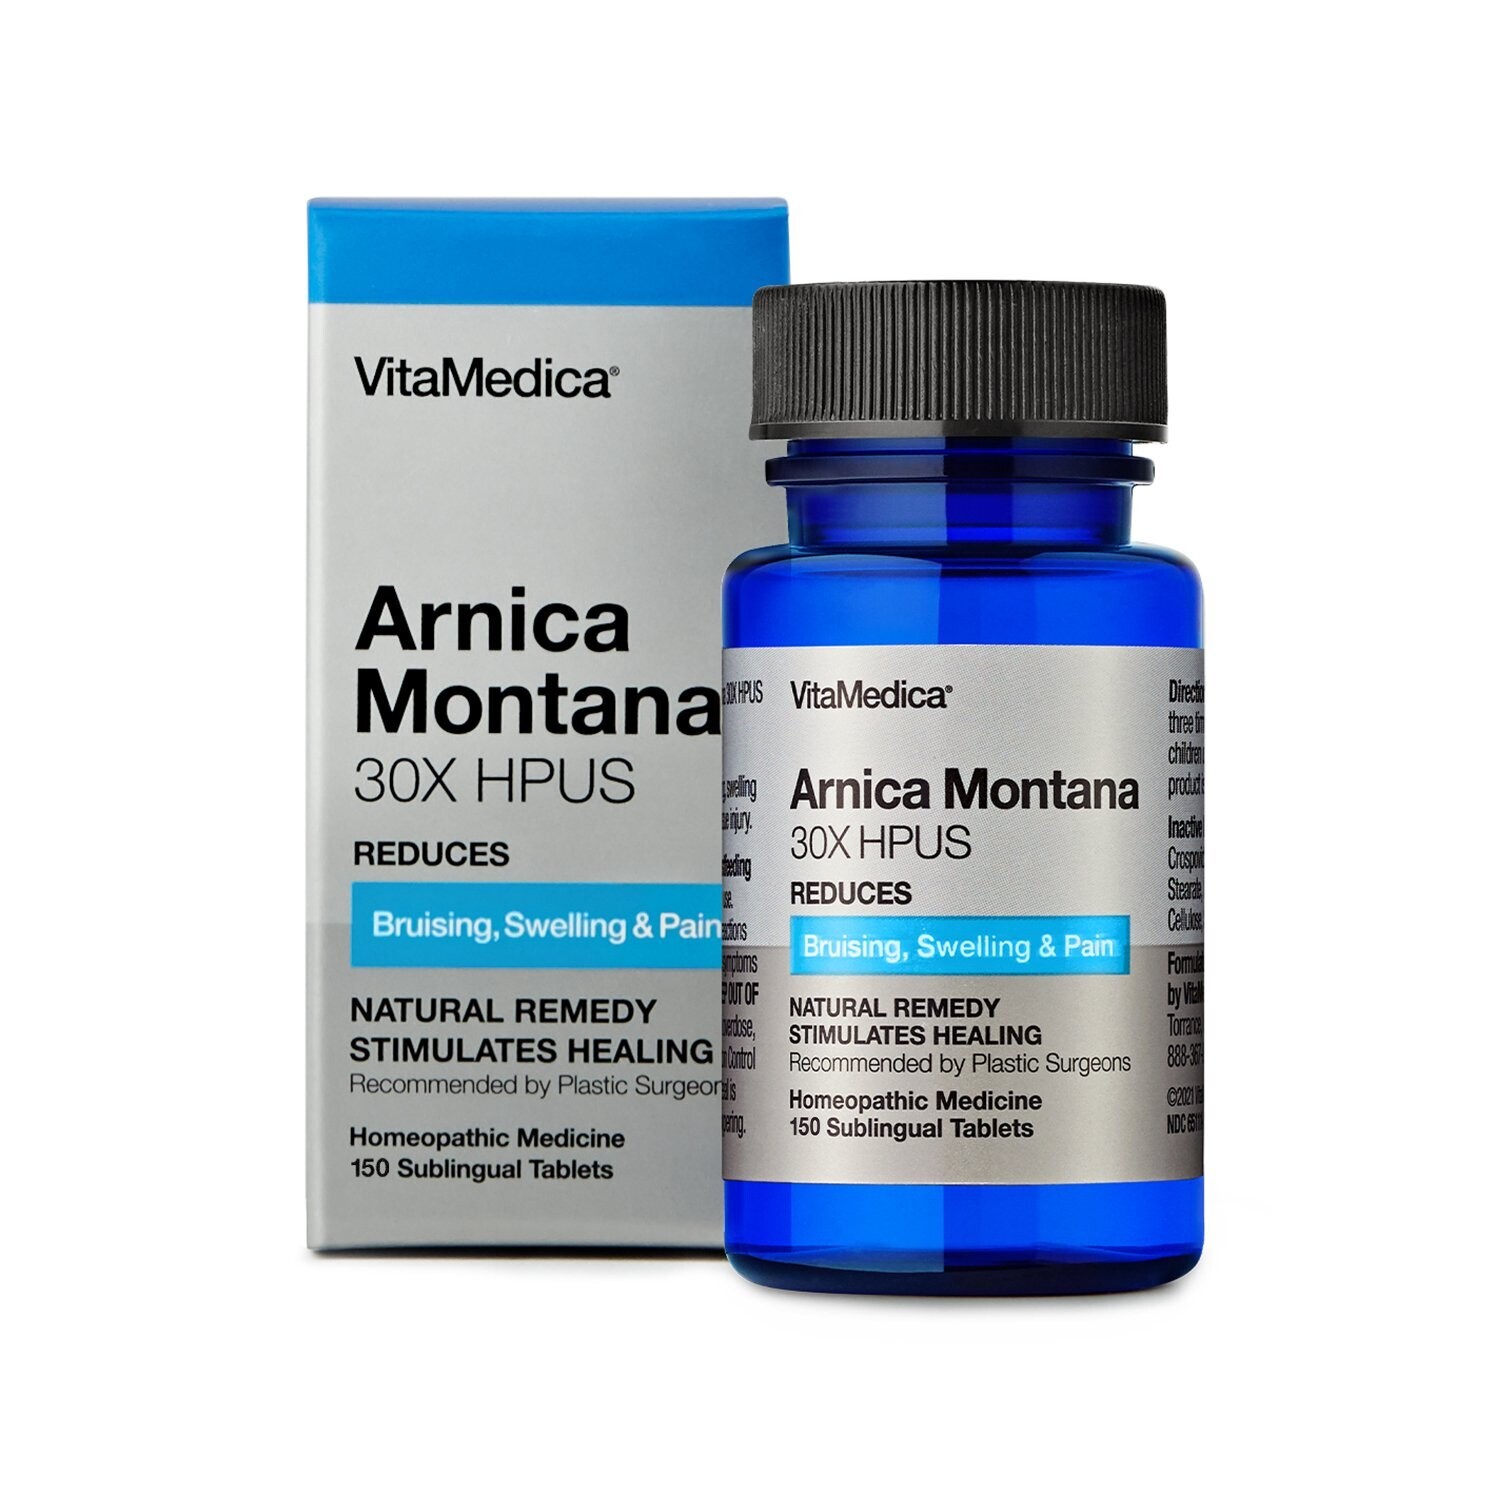 Vitamedica Arnica 30X HPUS (Blister Pack)